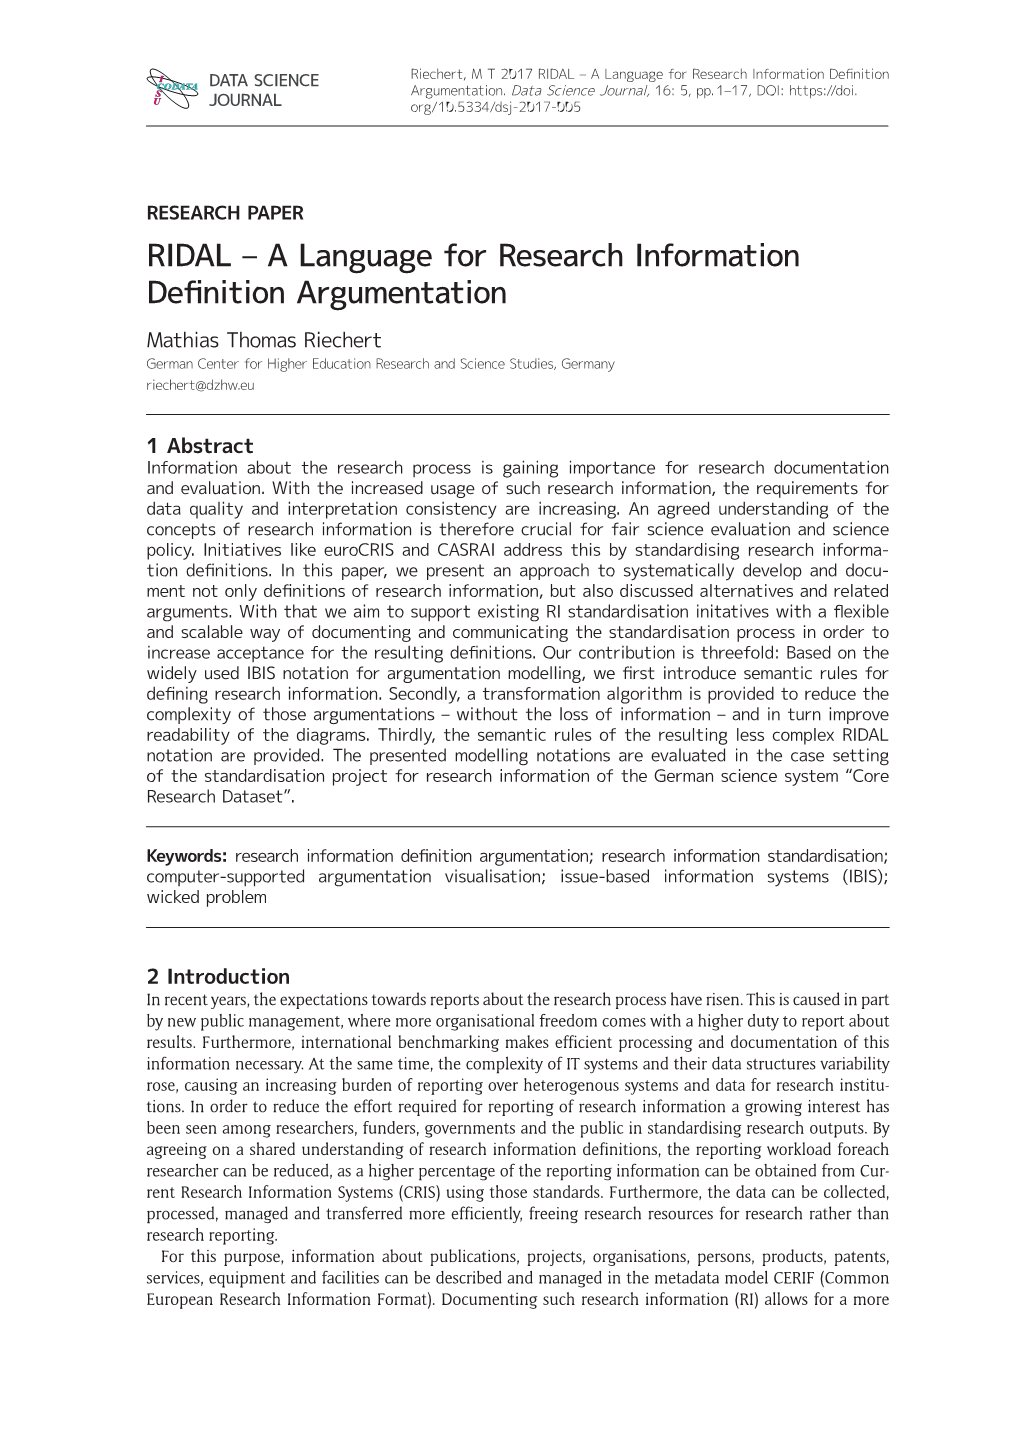 A Language for Research Information Definition Argumentation